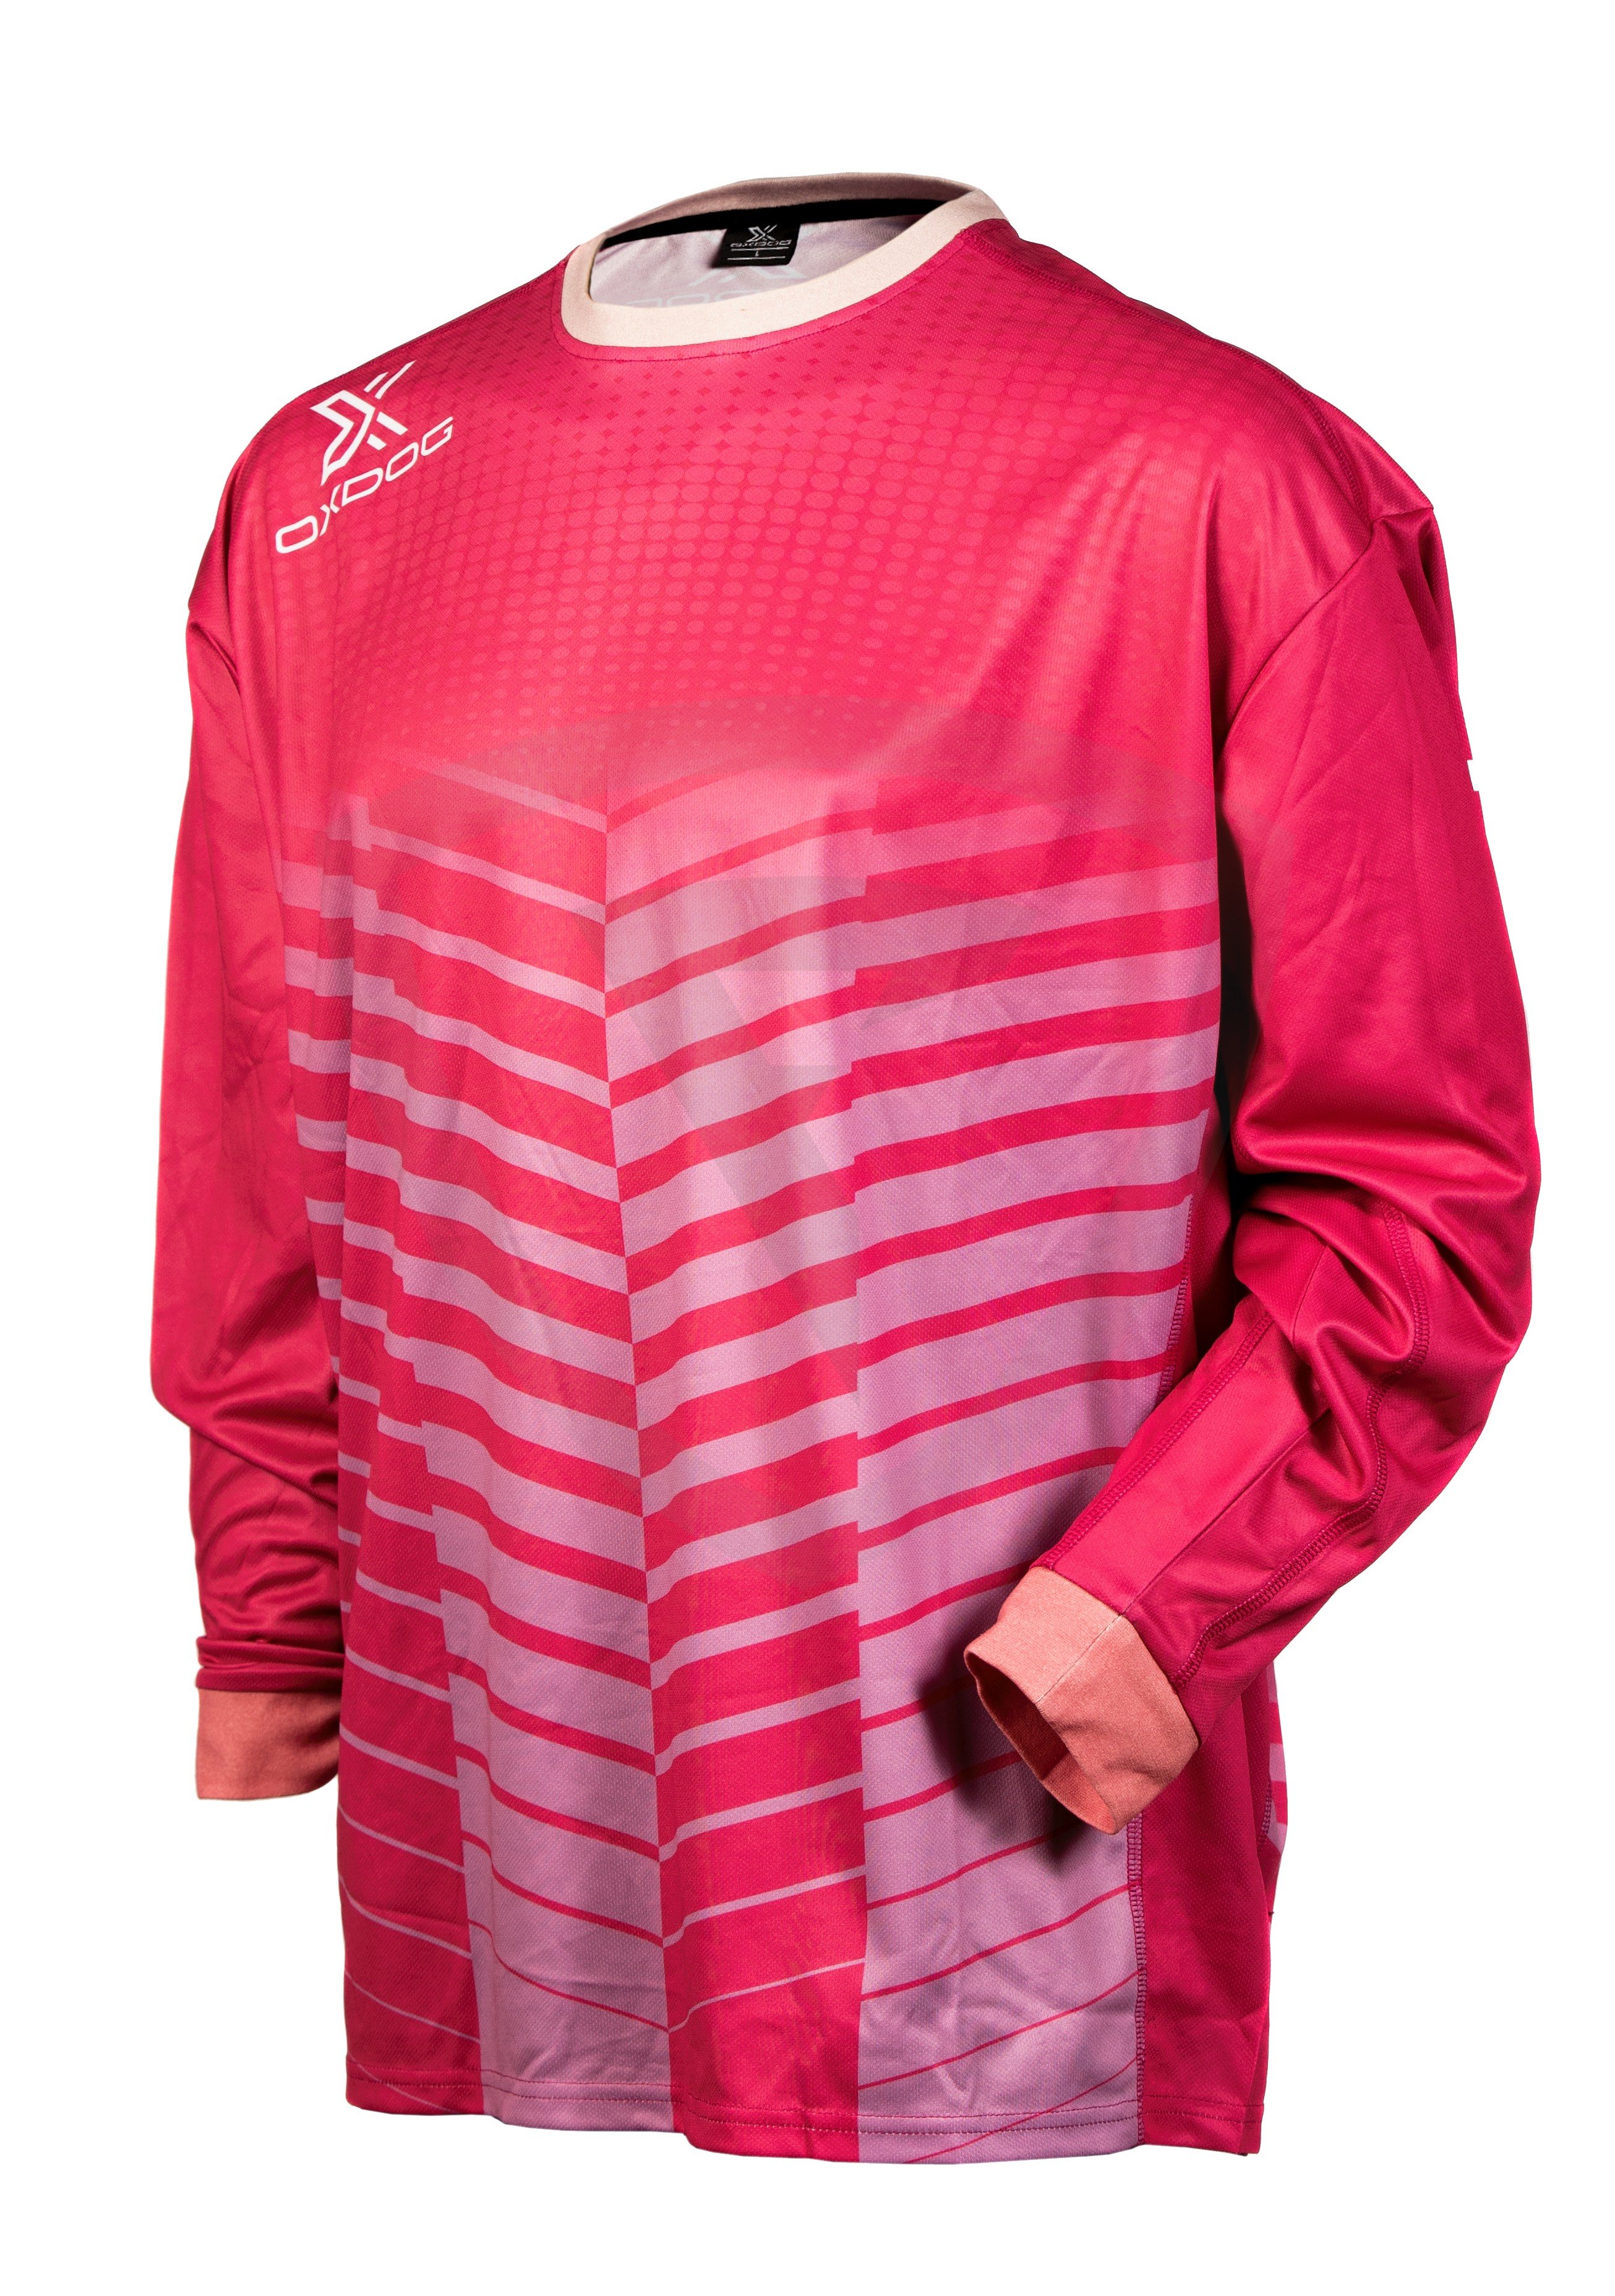 Oxdog Xguard Goalie Shirt Bleached Red No Padding XL